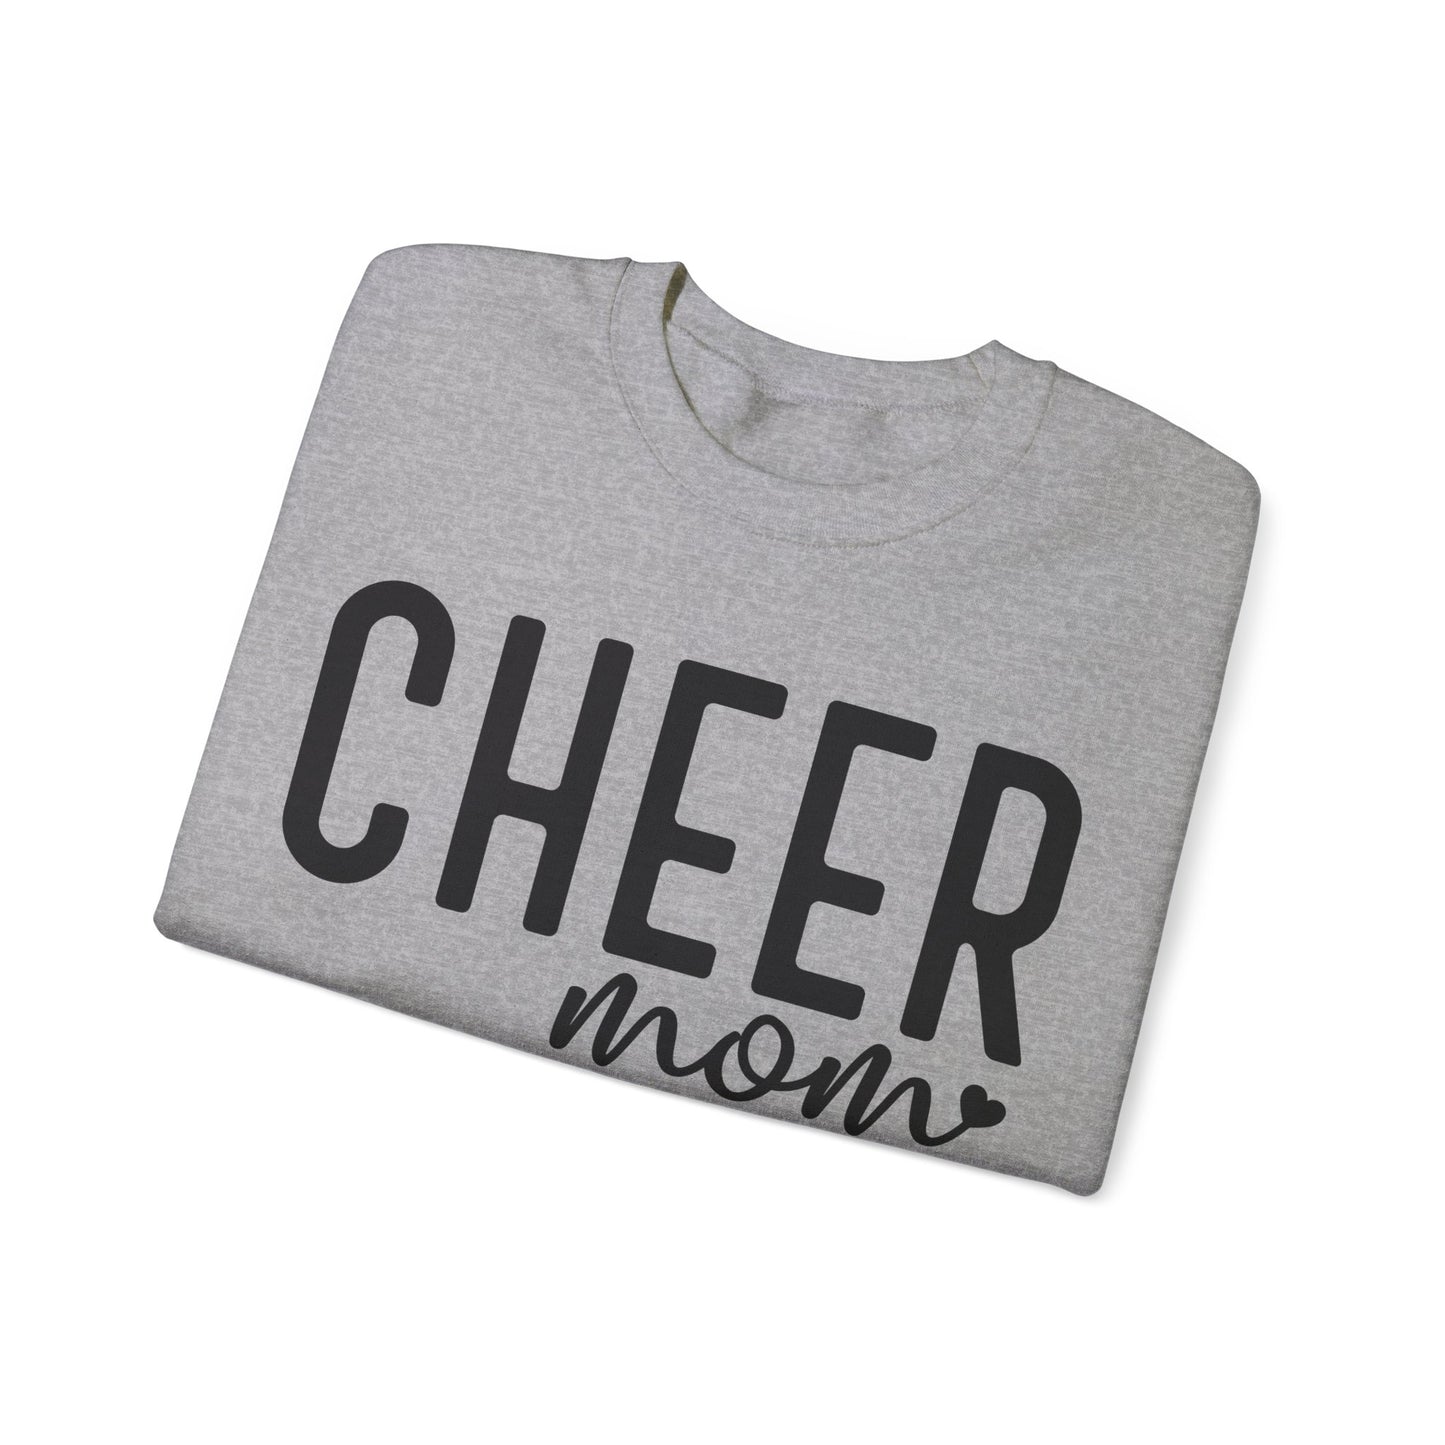 Cheer Mom - Crewneck Sweatshirt